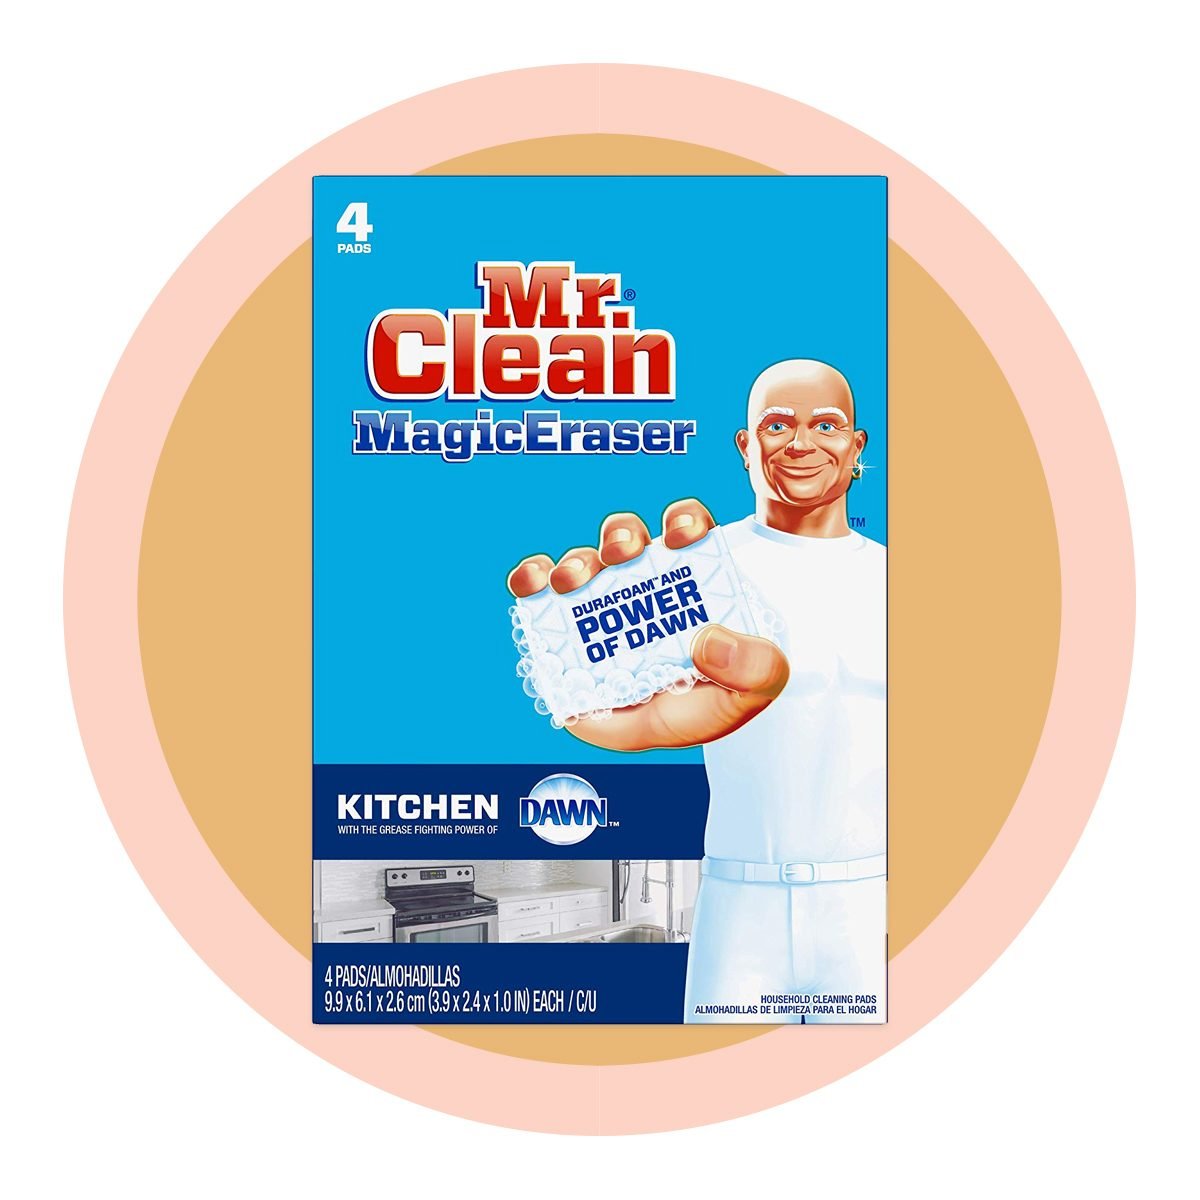 Mr. Clean Magic Eraser Dirty Little Secrets! #MagicEraser #ad - Mom Does  Reviews